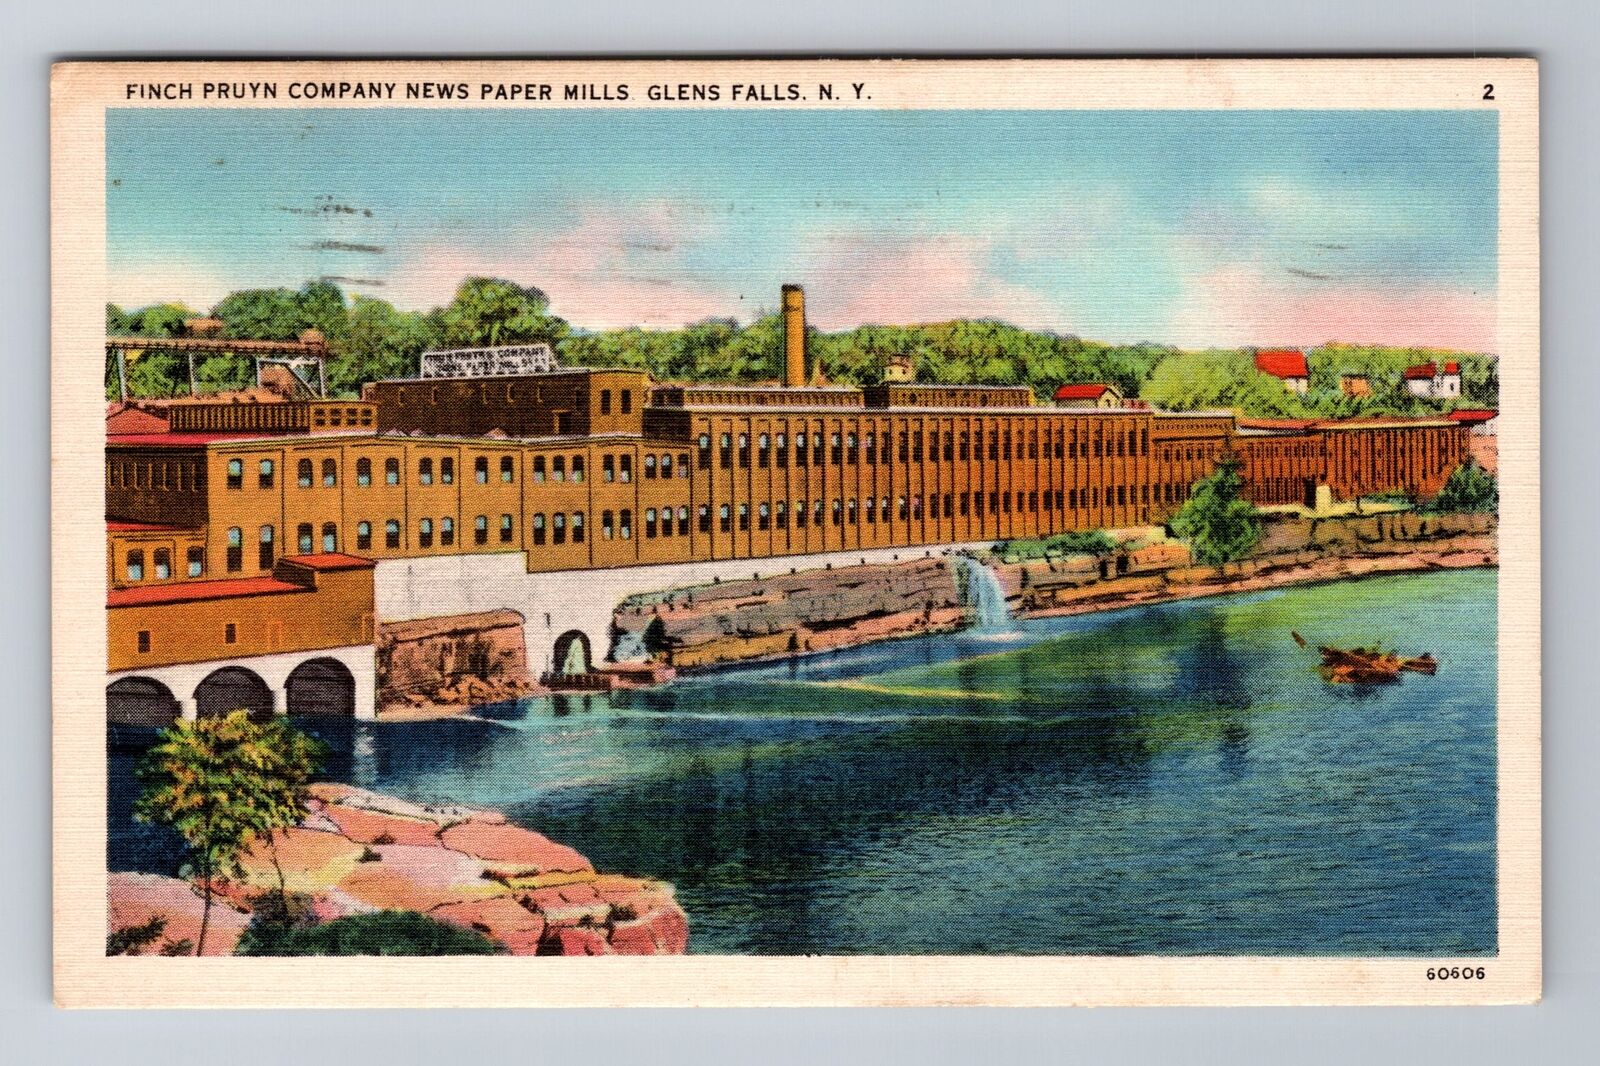 Glen Falls NY-New York, Finch Pruyn Co. News Paper Mills, Vintage c1944 Postcard